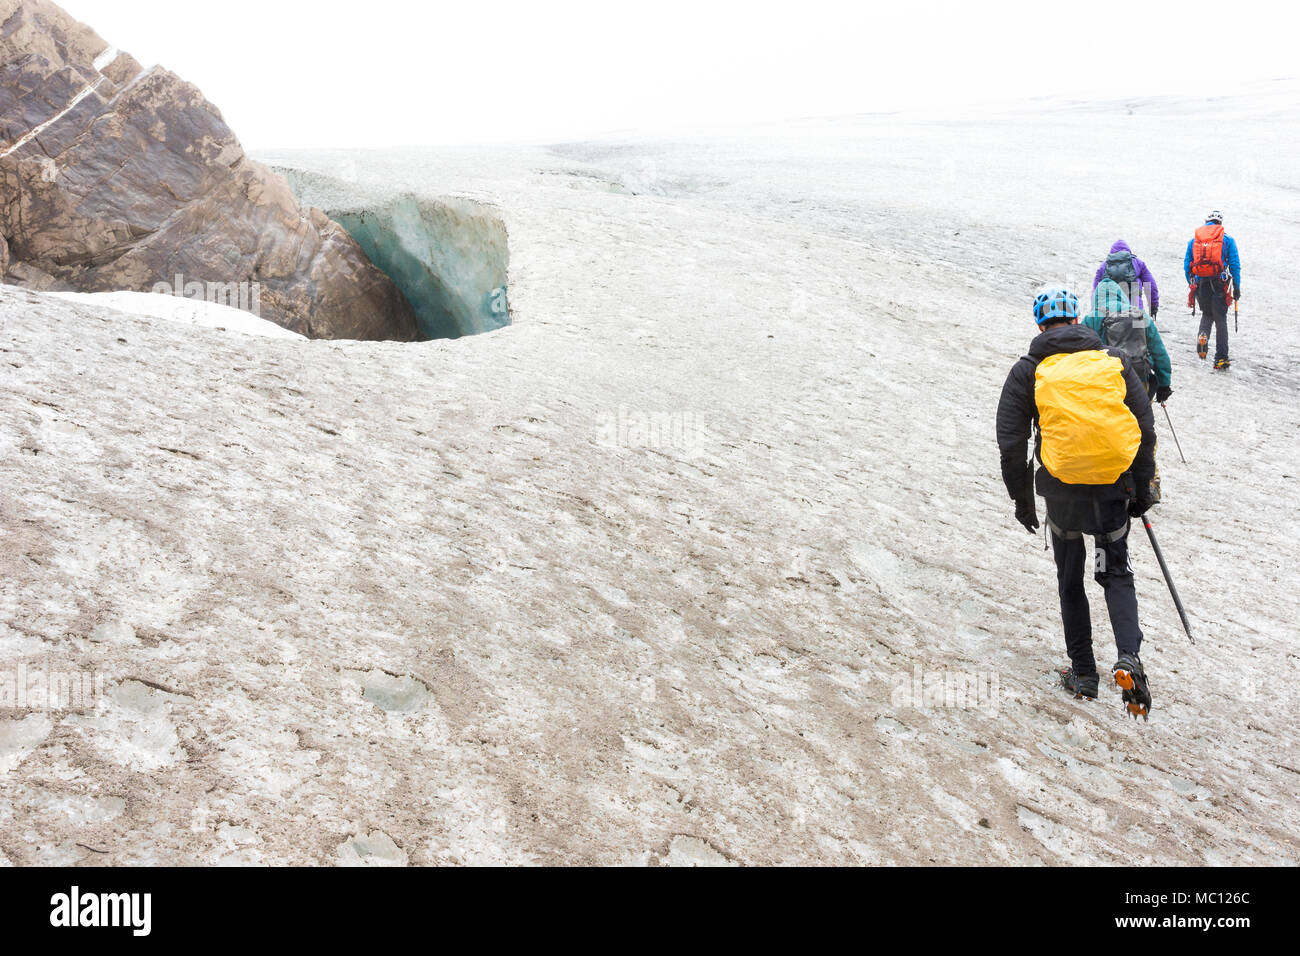 Four people trek across an icy glacier past a dangerous crevasse during a tourist adventure, Juneau Icefield, Juneau, Alaska, USA Stock Photo